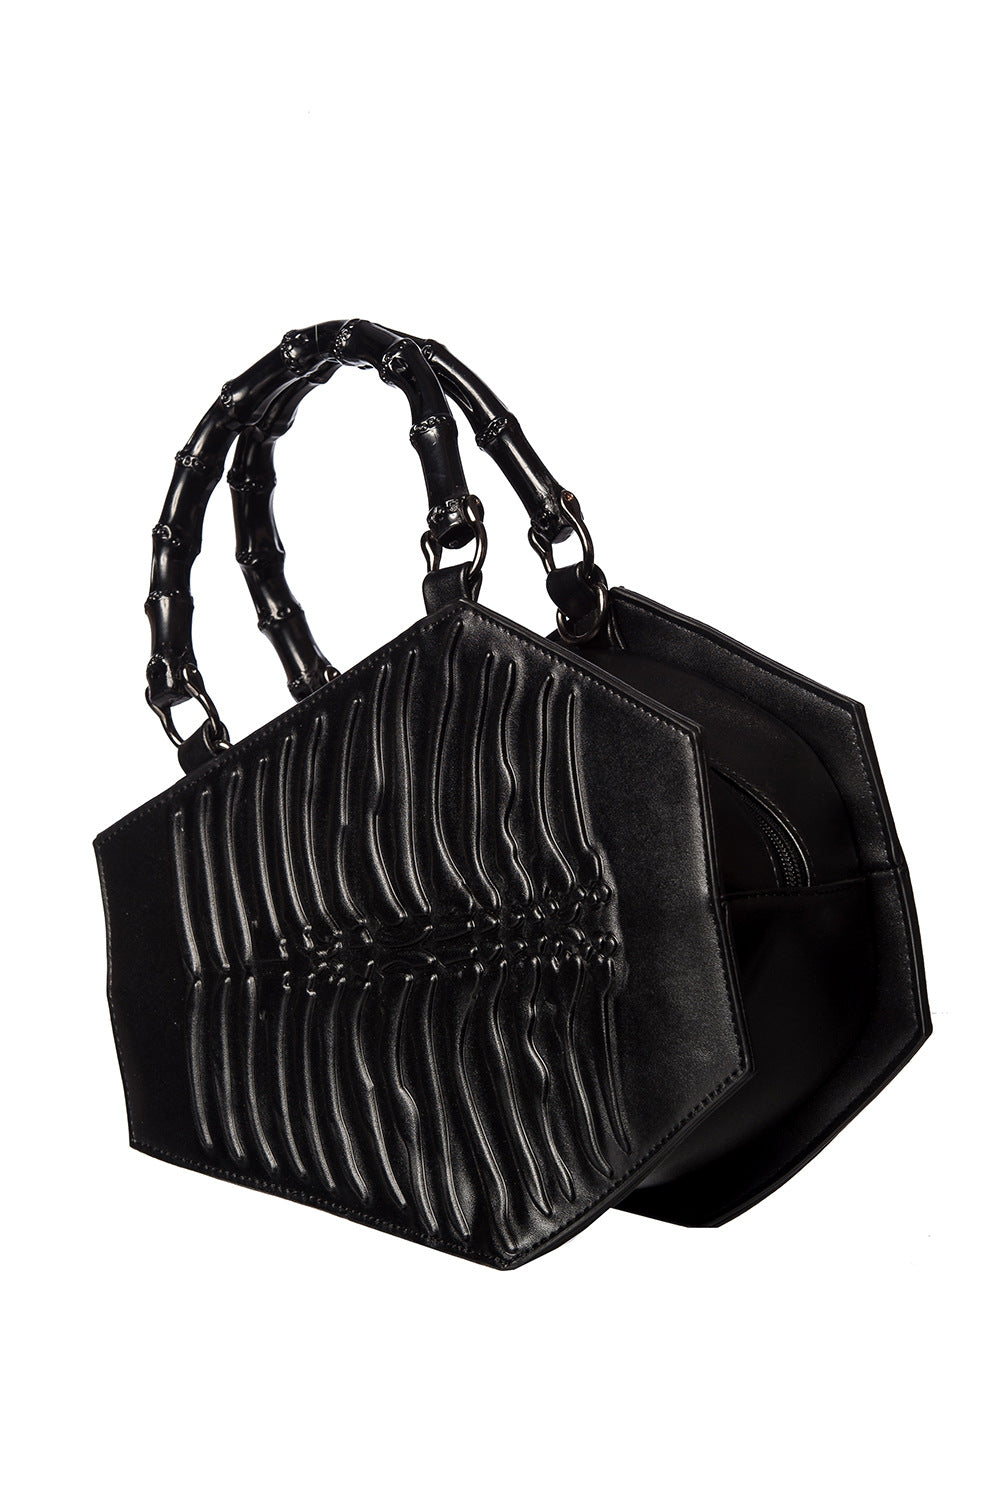 Ribcage print emboss coffin shaped handbag